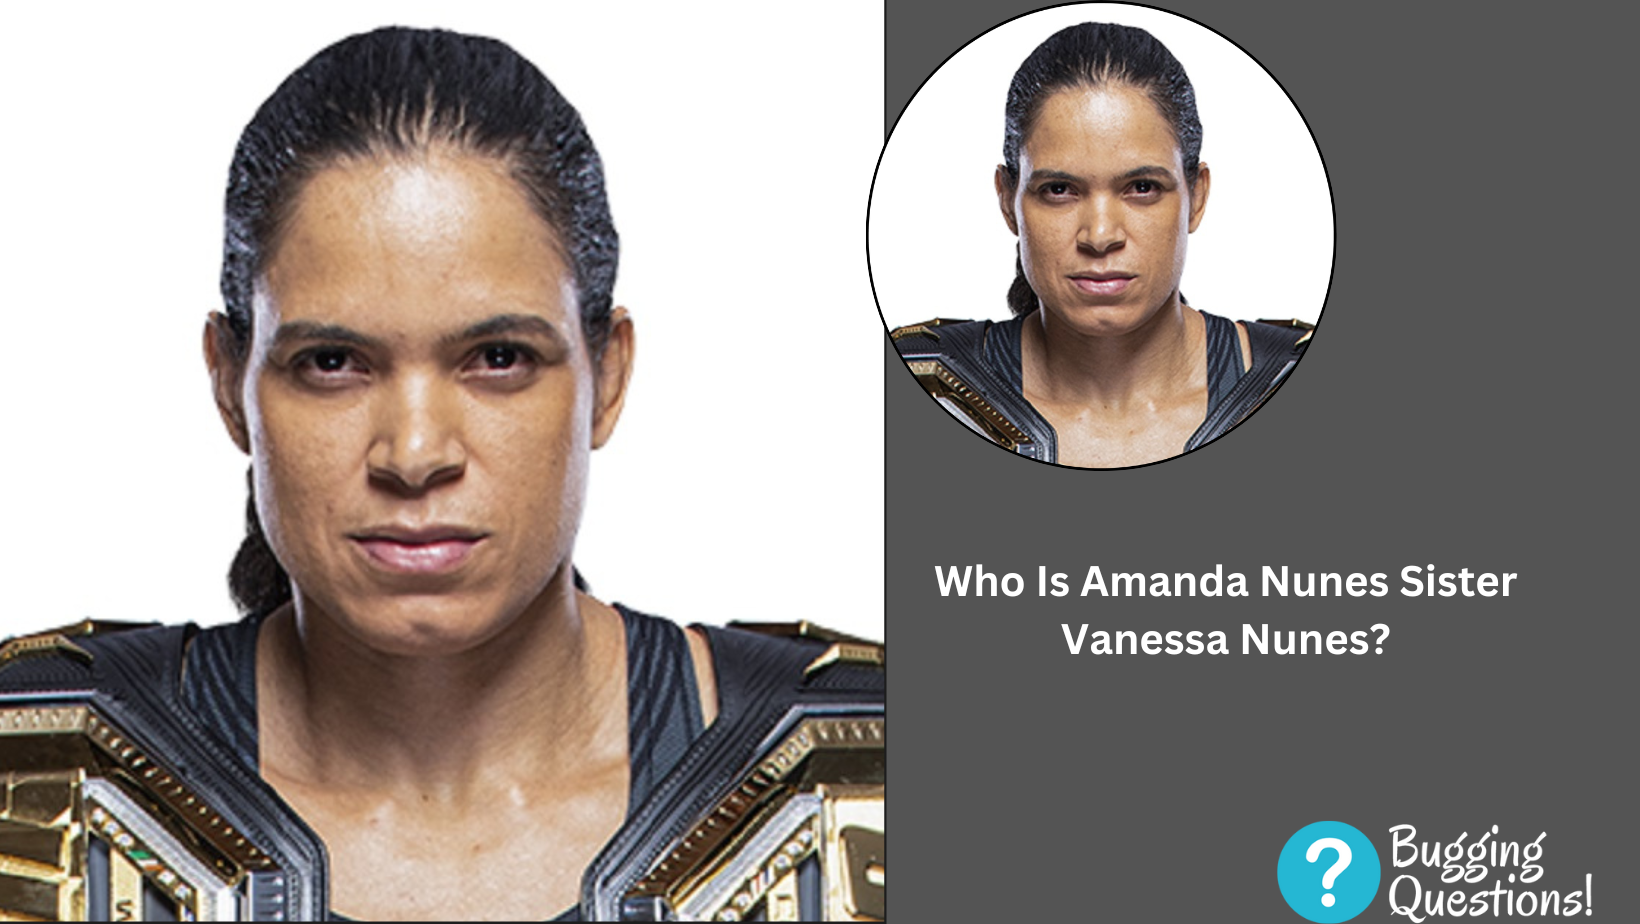 Who Is Amanda Nunes Sister Vanessa Nunes?